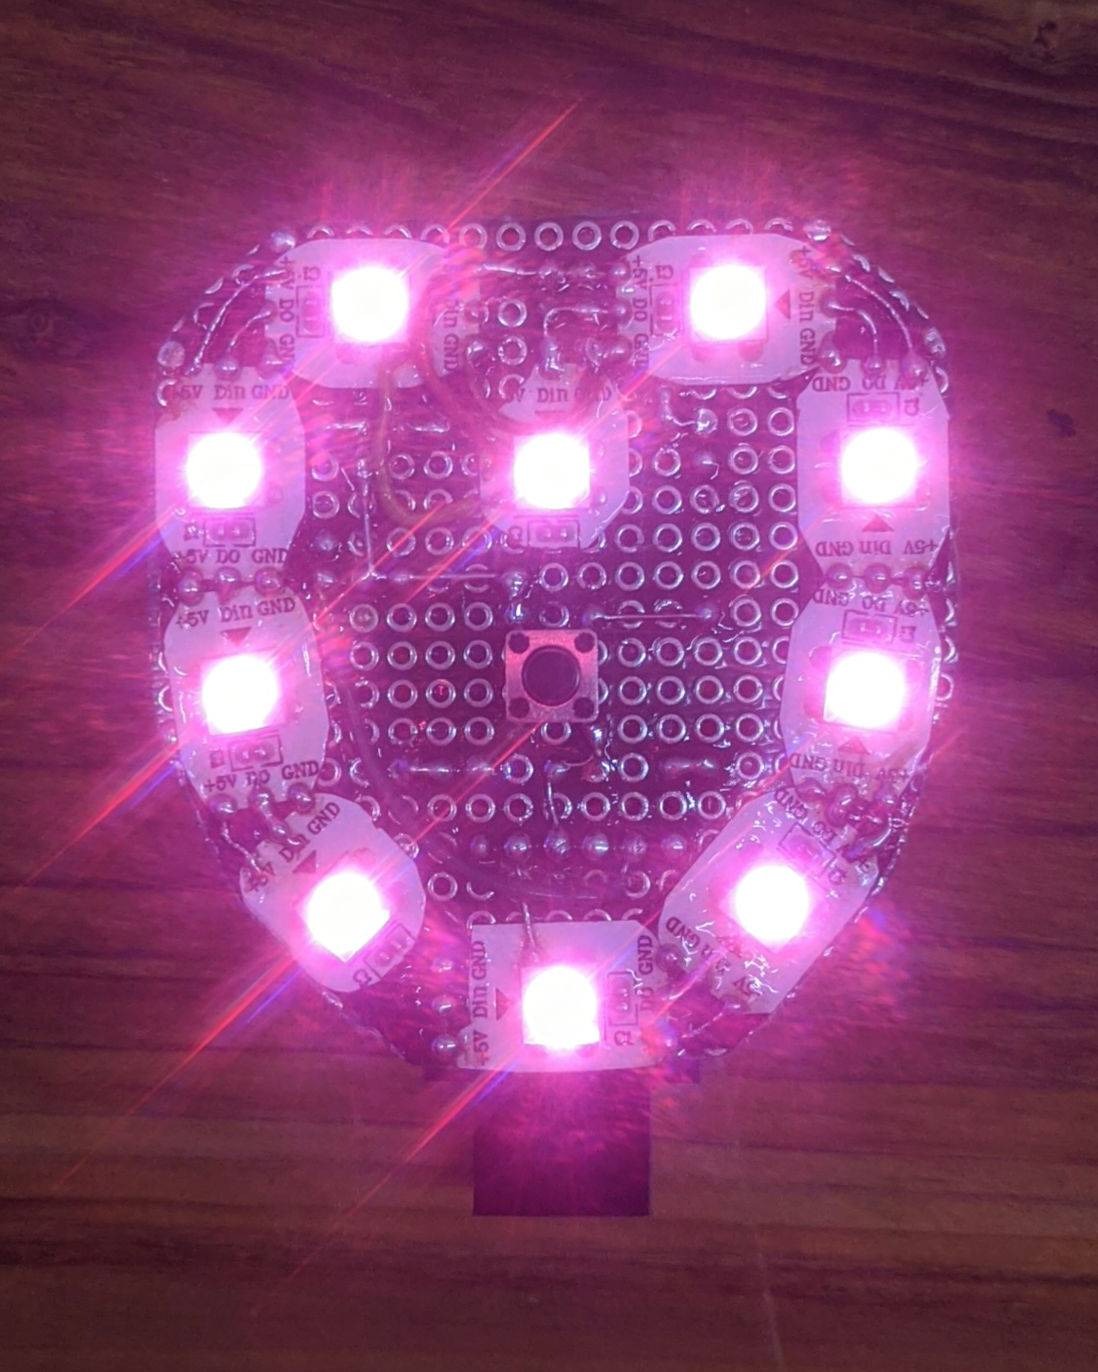 Final look of the heart - pink light